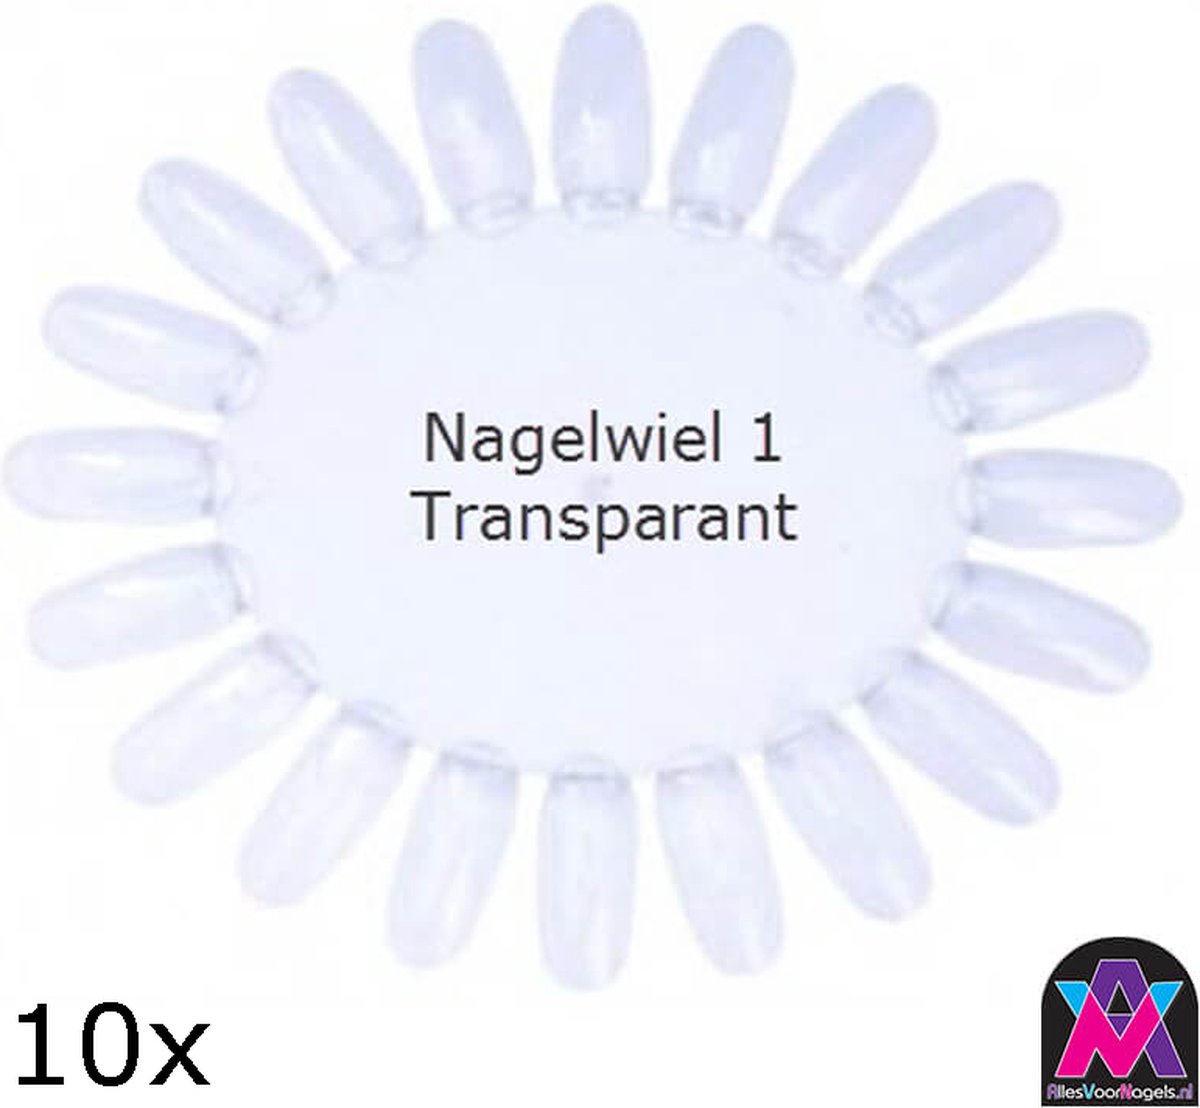 AVN - nagelwiel - transparante nagel display - voordeelverpakking: 10 x 20 nagels